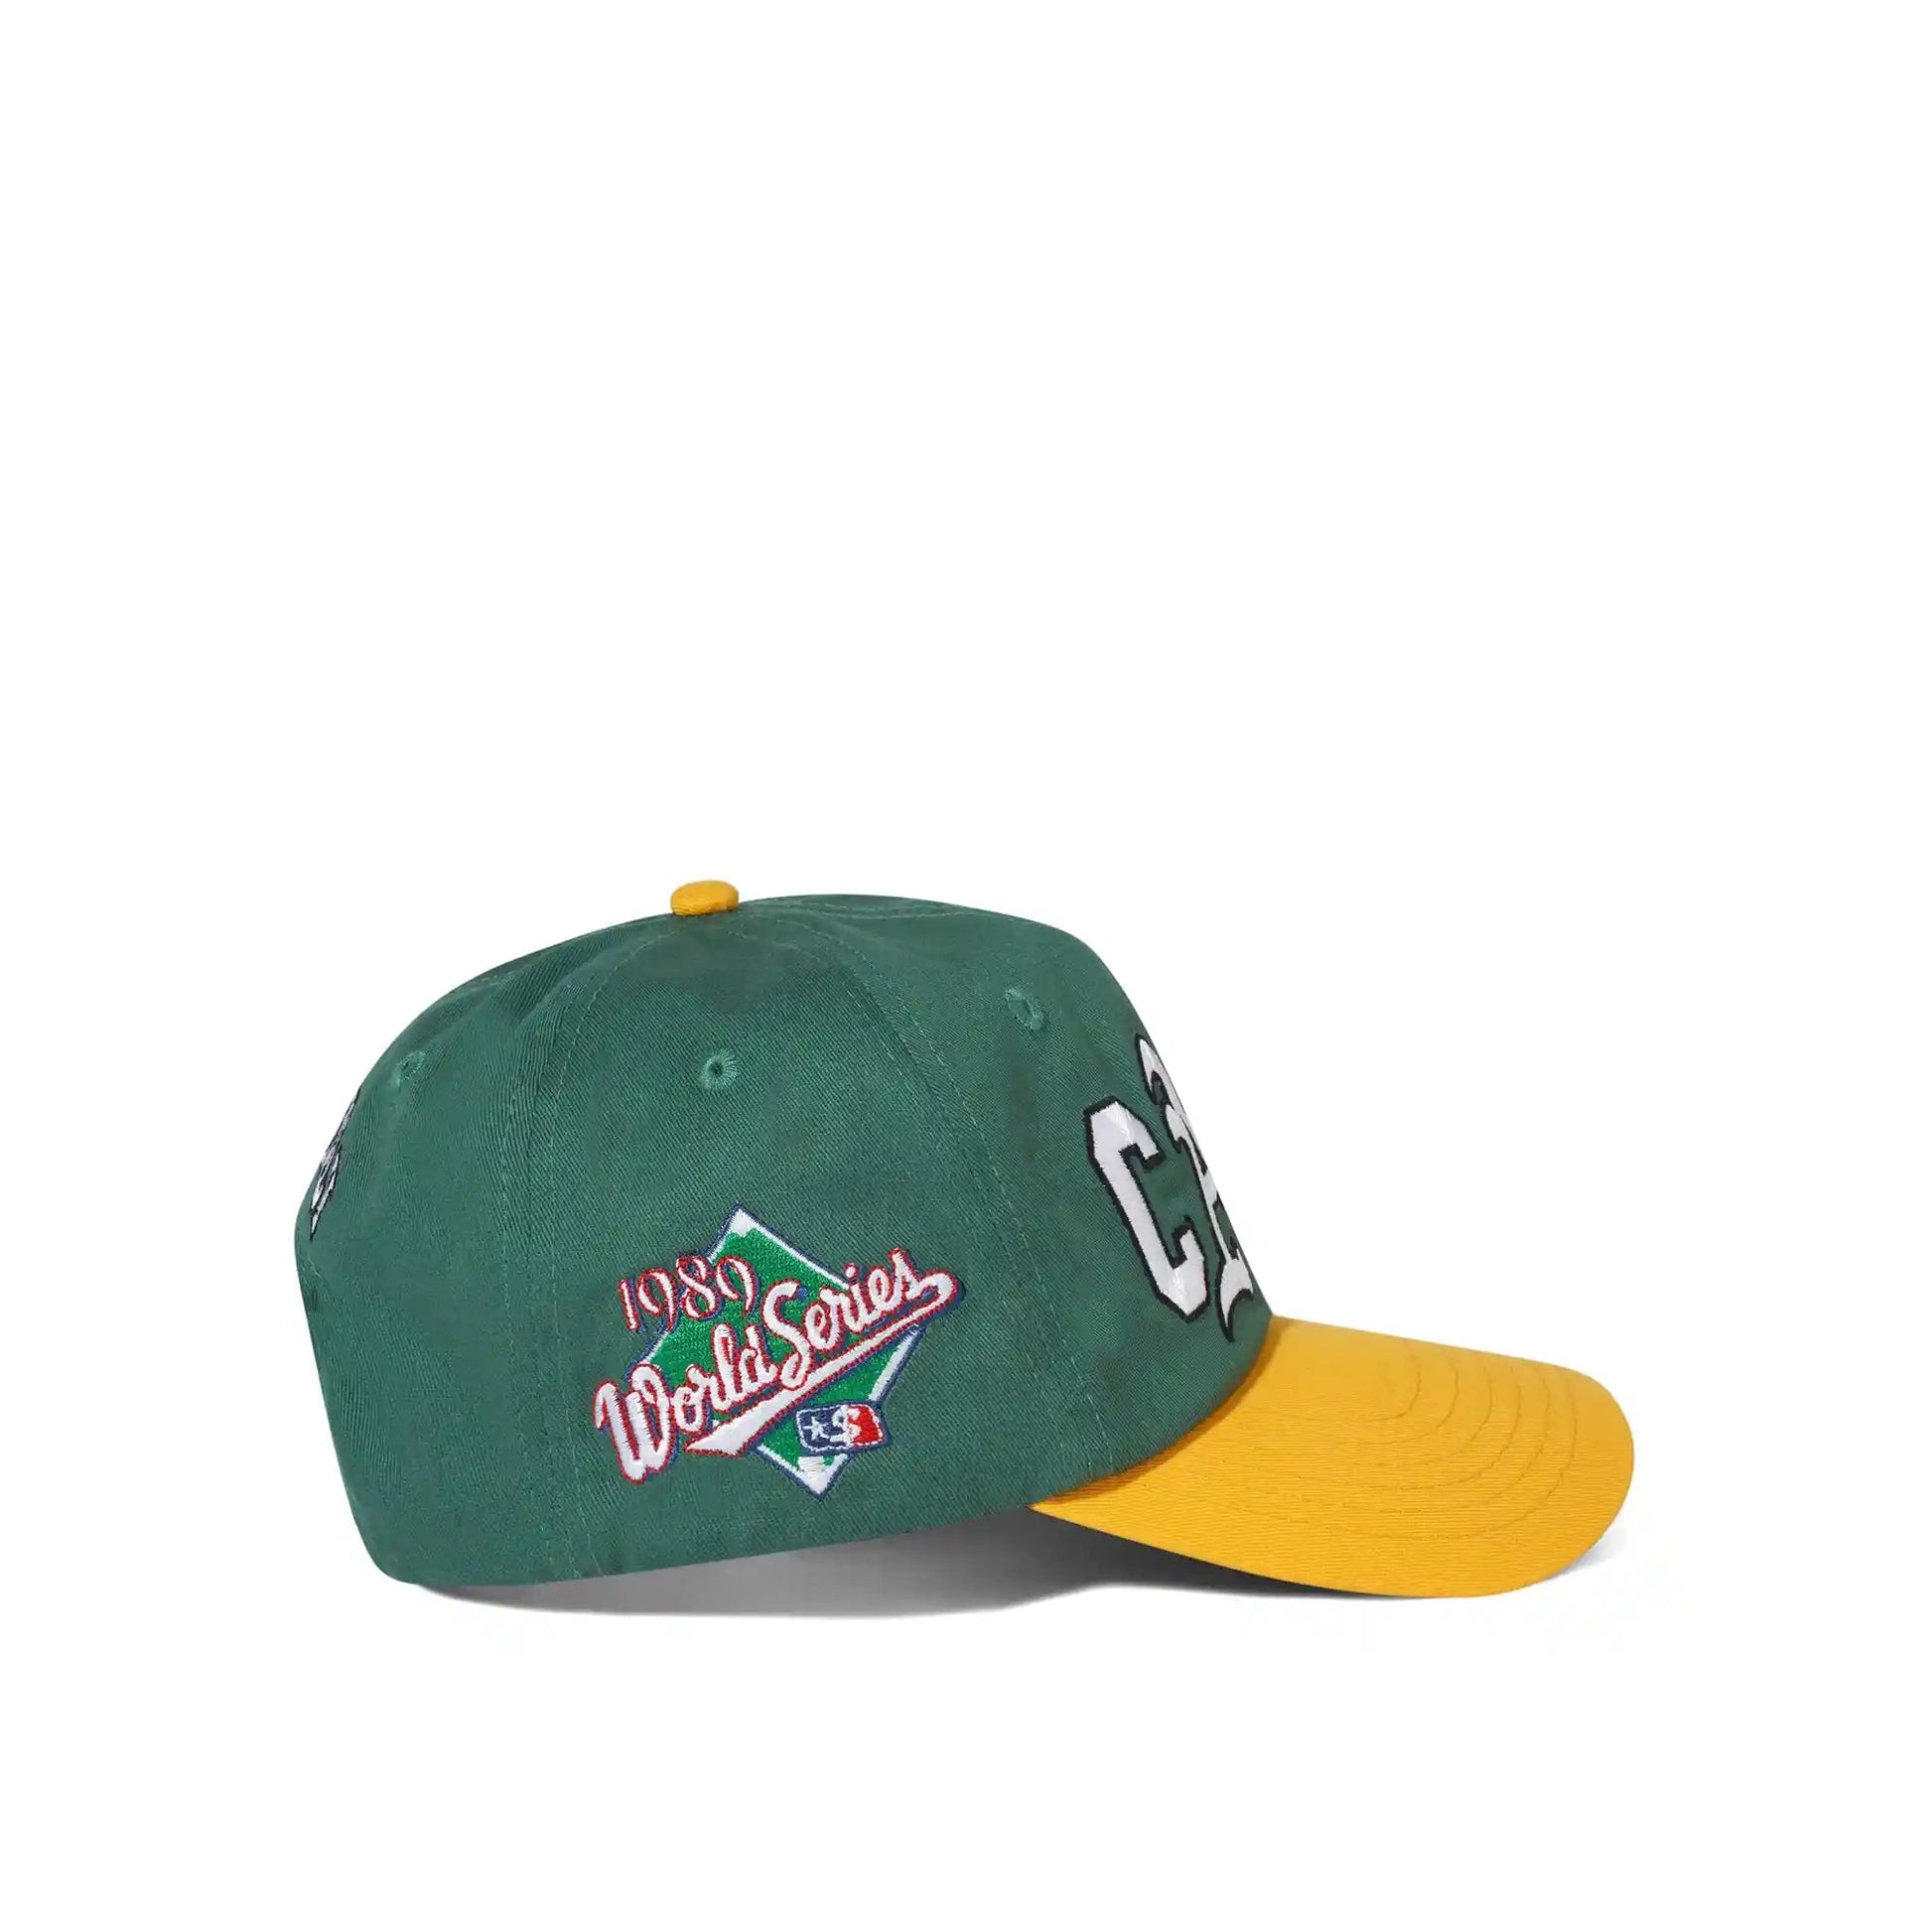 Cash Only Ballpark Snapback Cap, green / gold - Tiki Room Skateboards - 3